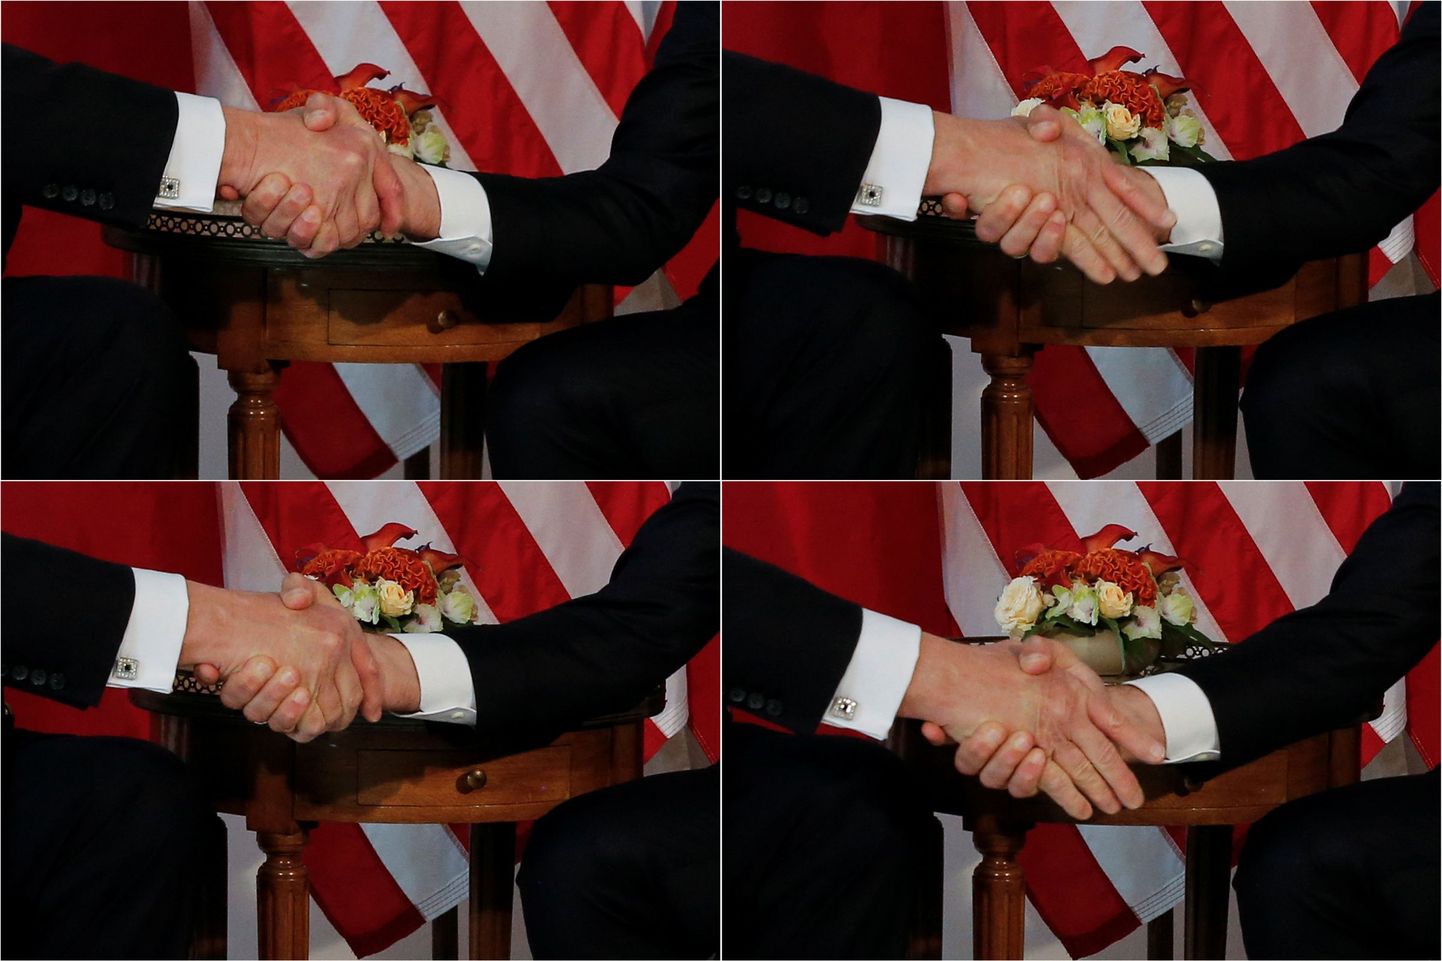 USA presidendi Donald Trumpi (vasakul) ja Prantsuse presidendi Emmanuel Macroni käepigistus.